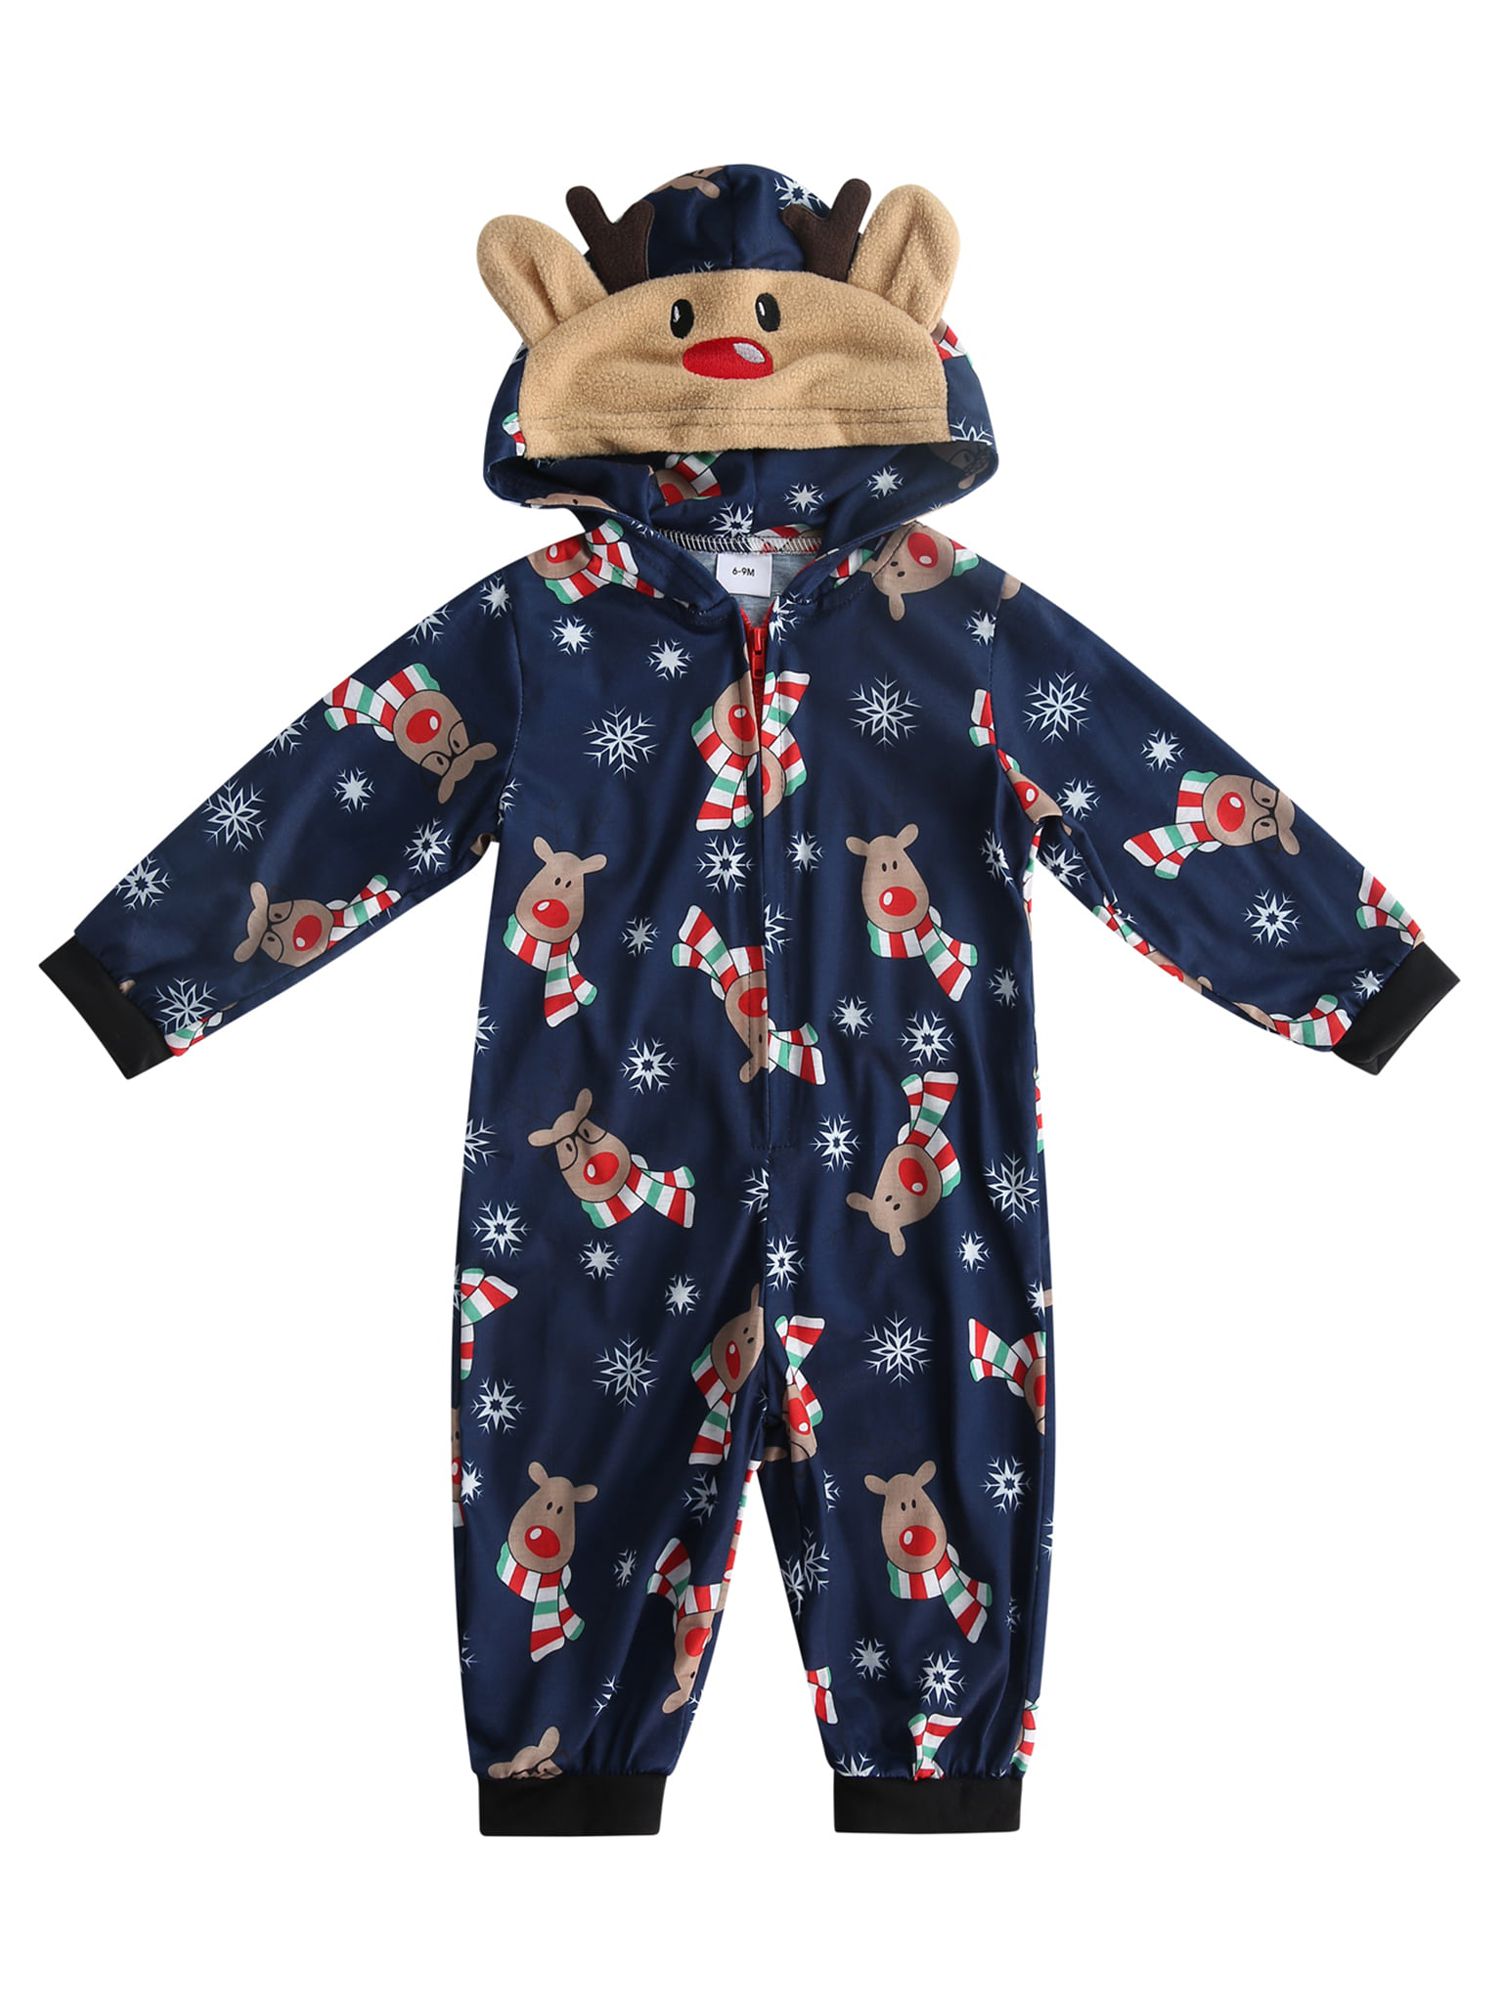 Shuttle tree Family Christmas Matching Pajamas Cartoon Deer Hooded Onesies Xmas One-Pieces Sleepwear Adult Kids Baby - image 2 of 7